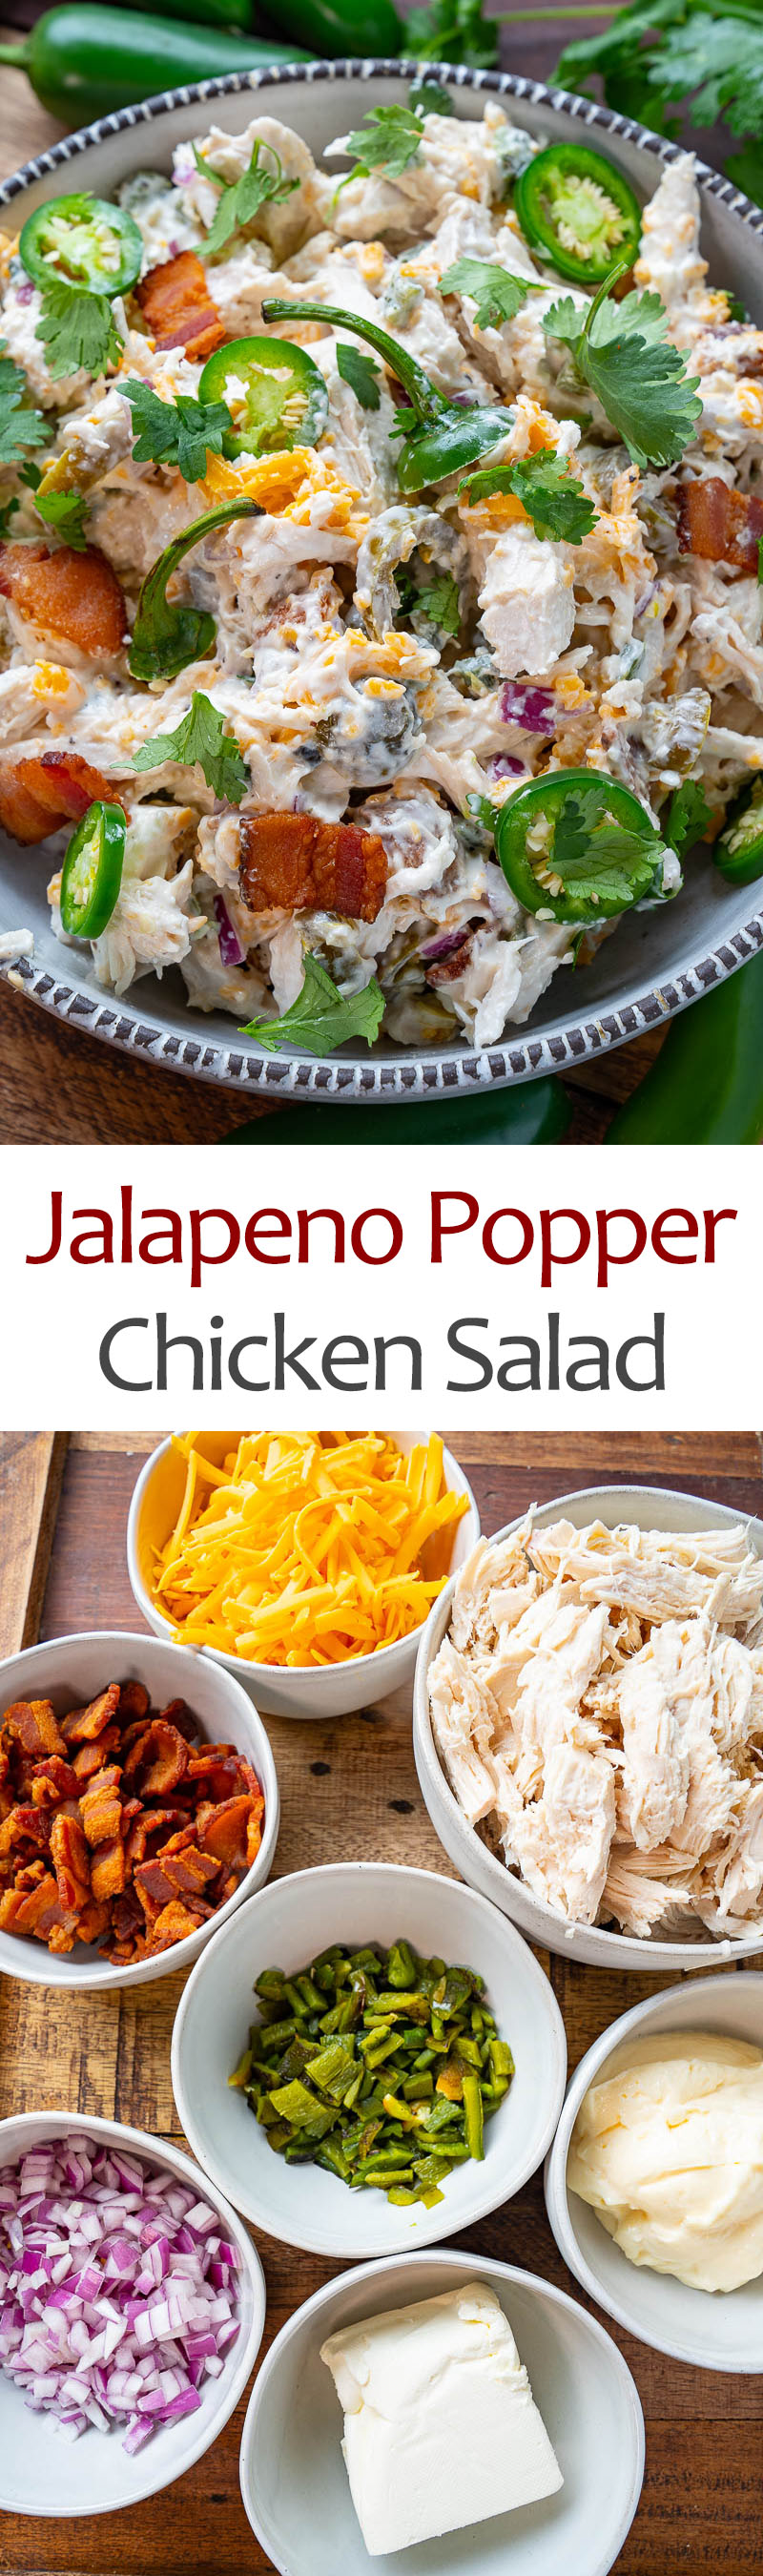 Jalapeno Popper Chicken Salad